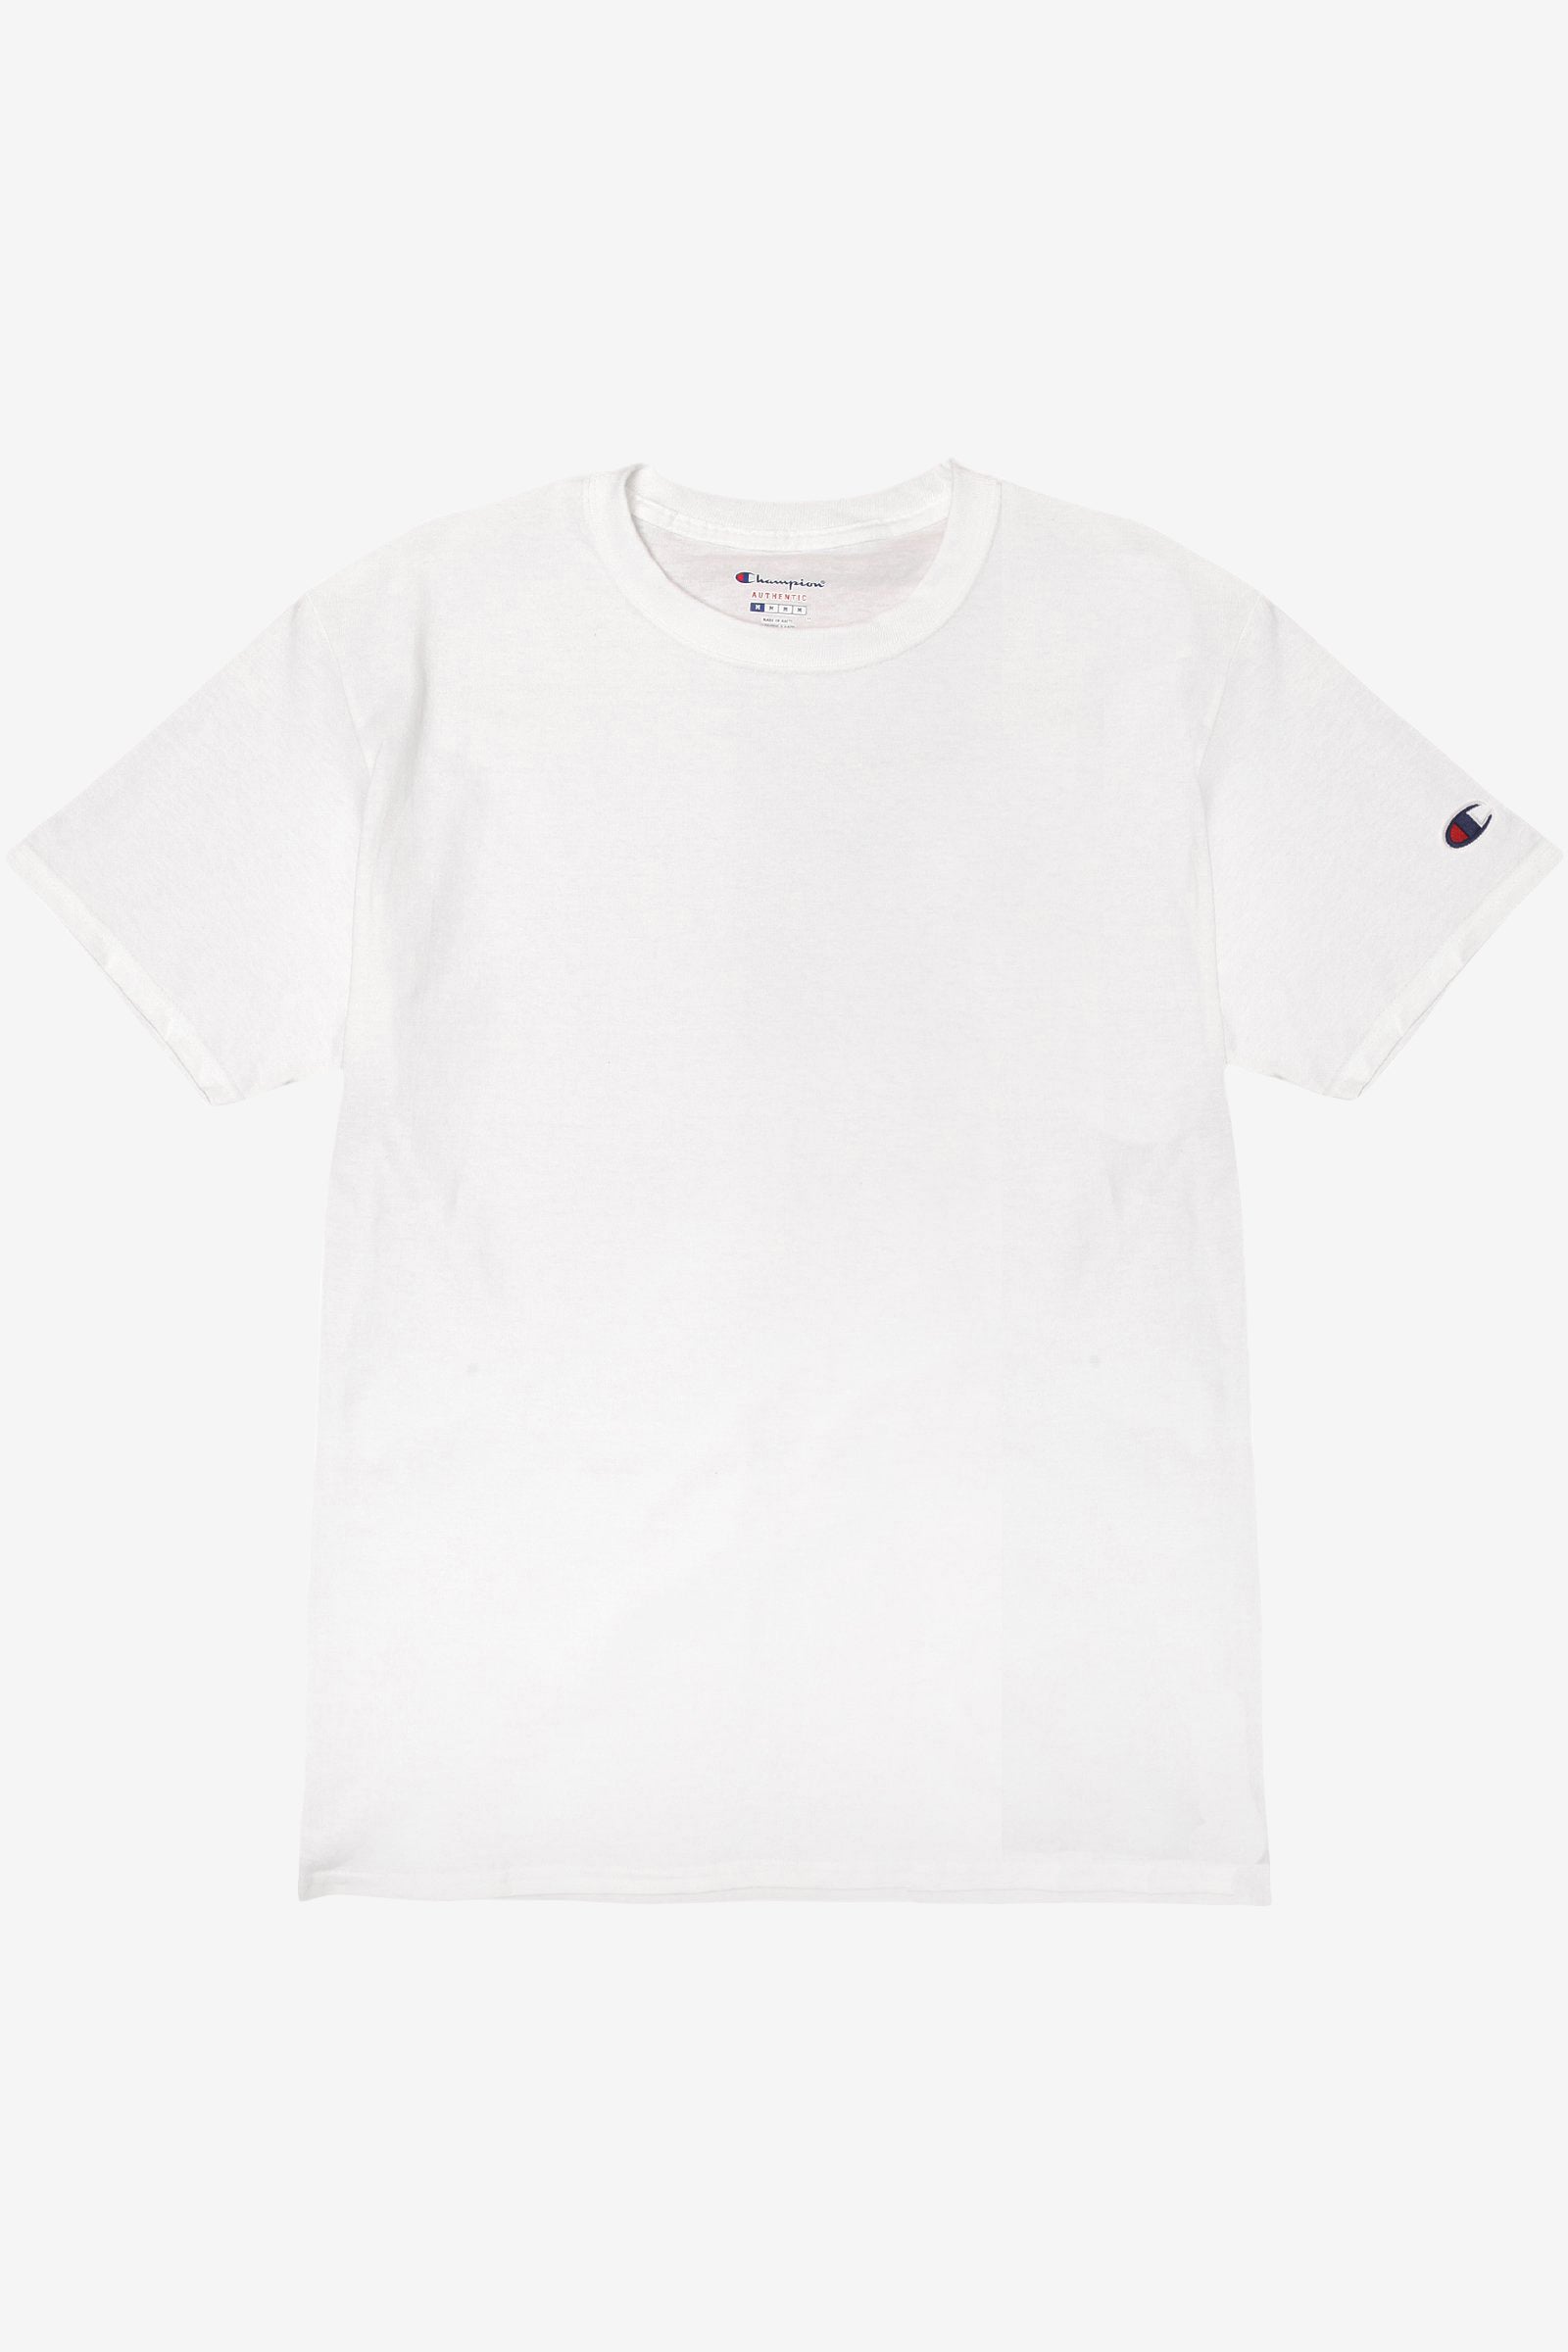 Naleving van ophouden Gezamenlijke selectie Champion - 6oz Classic T-Shirt - White | Blacksmith Store